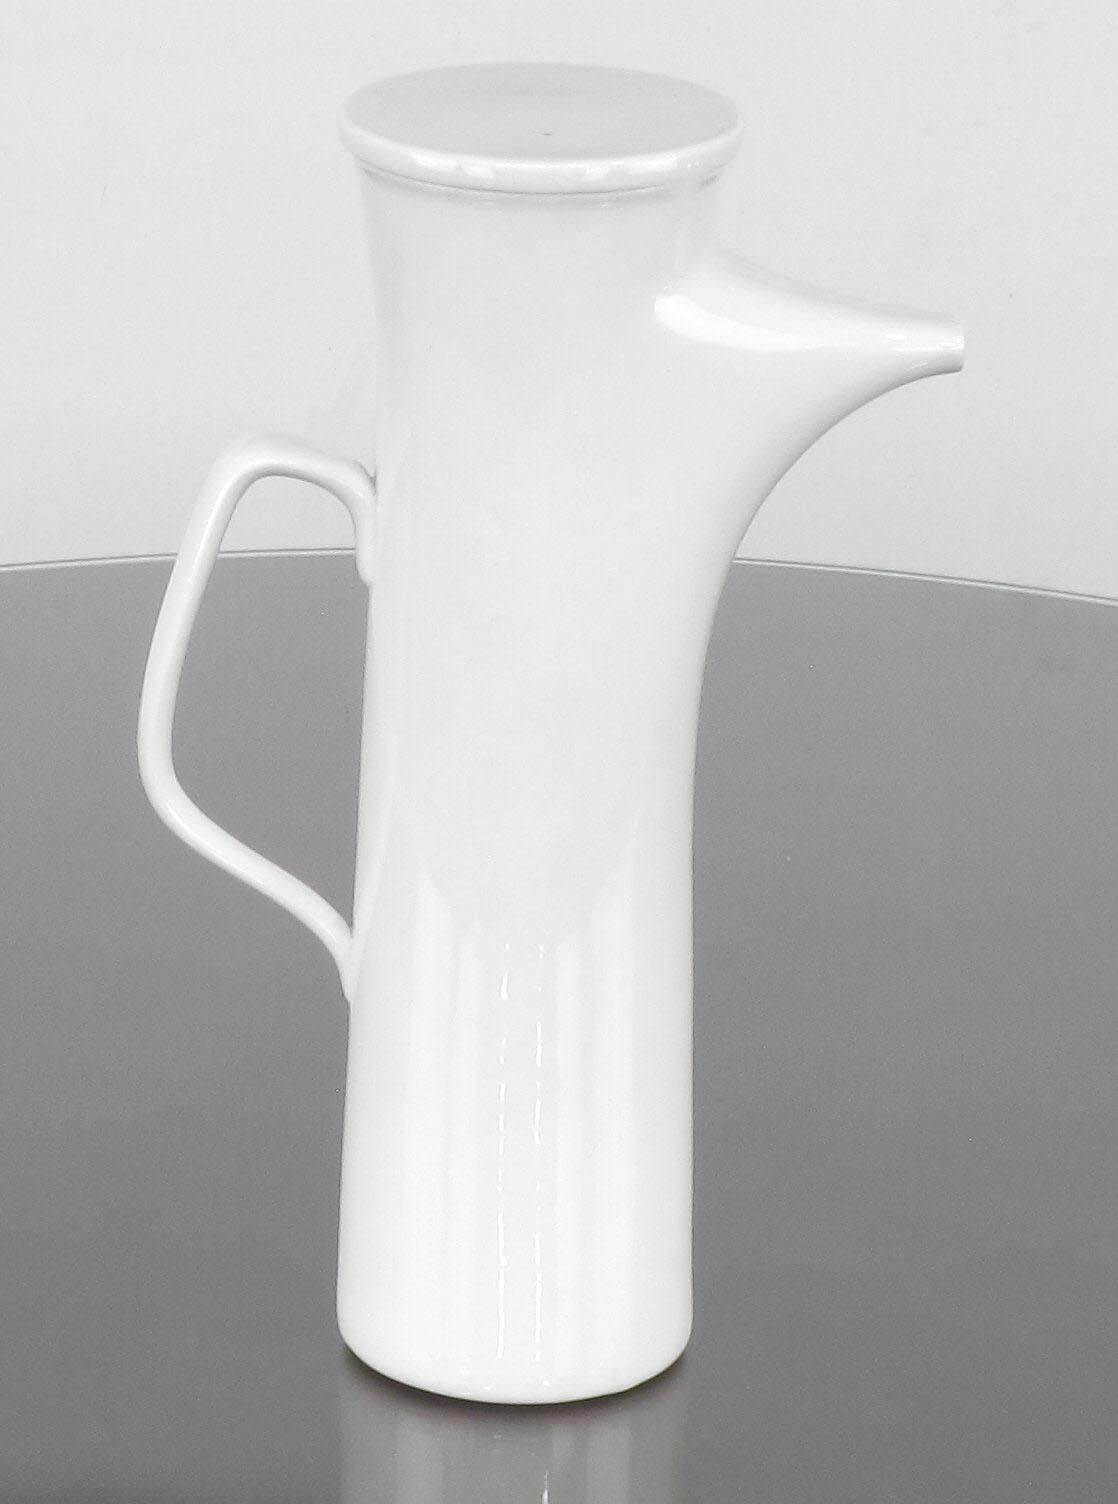 Rare complete 15-piece coffee or tea service designed by La Gardo Tackett for Schmid International, Japan, 1960s. The porcelain ceramic 